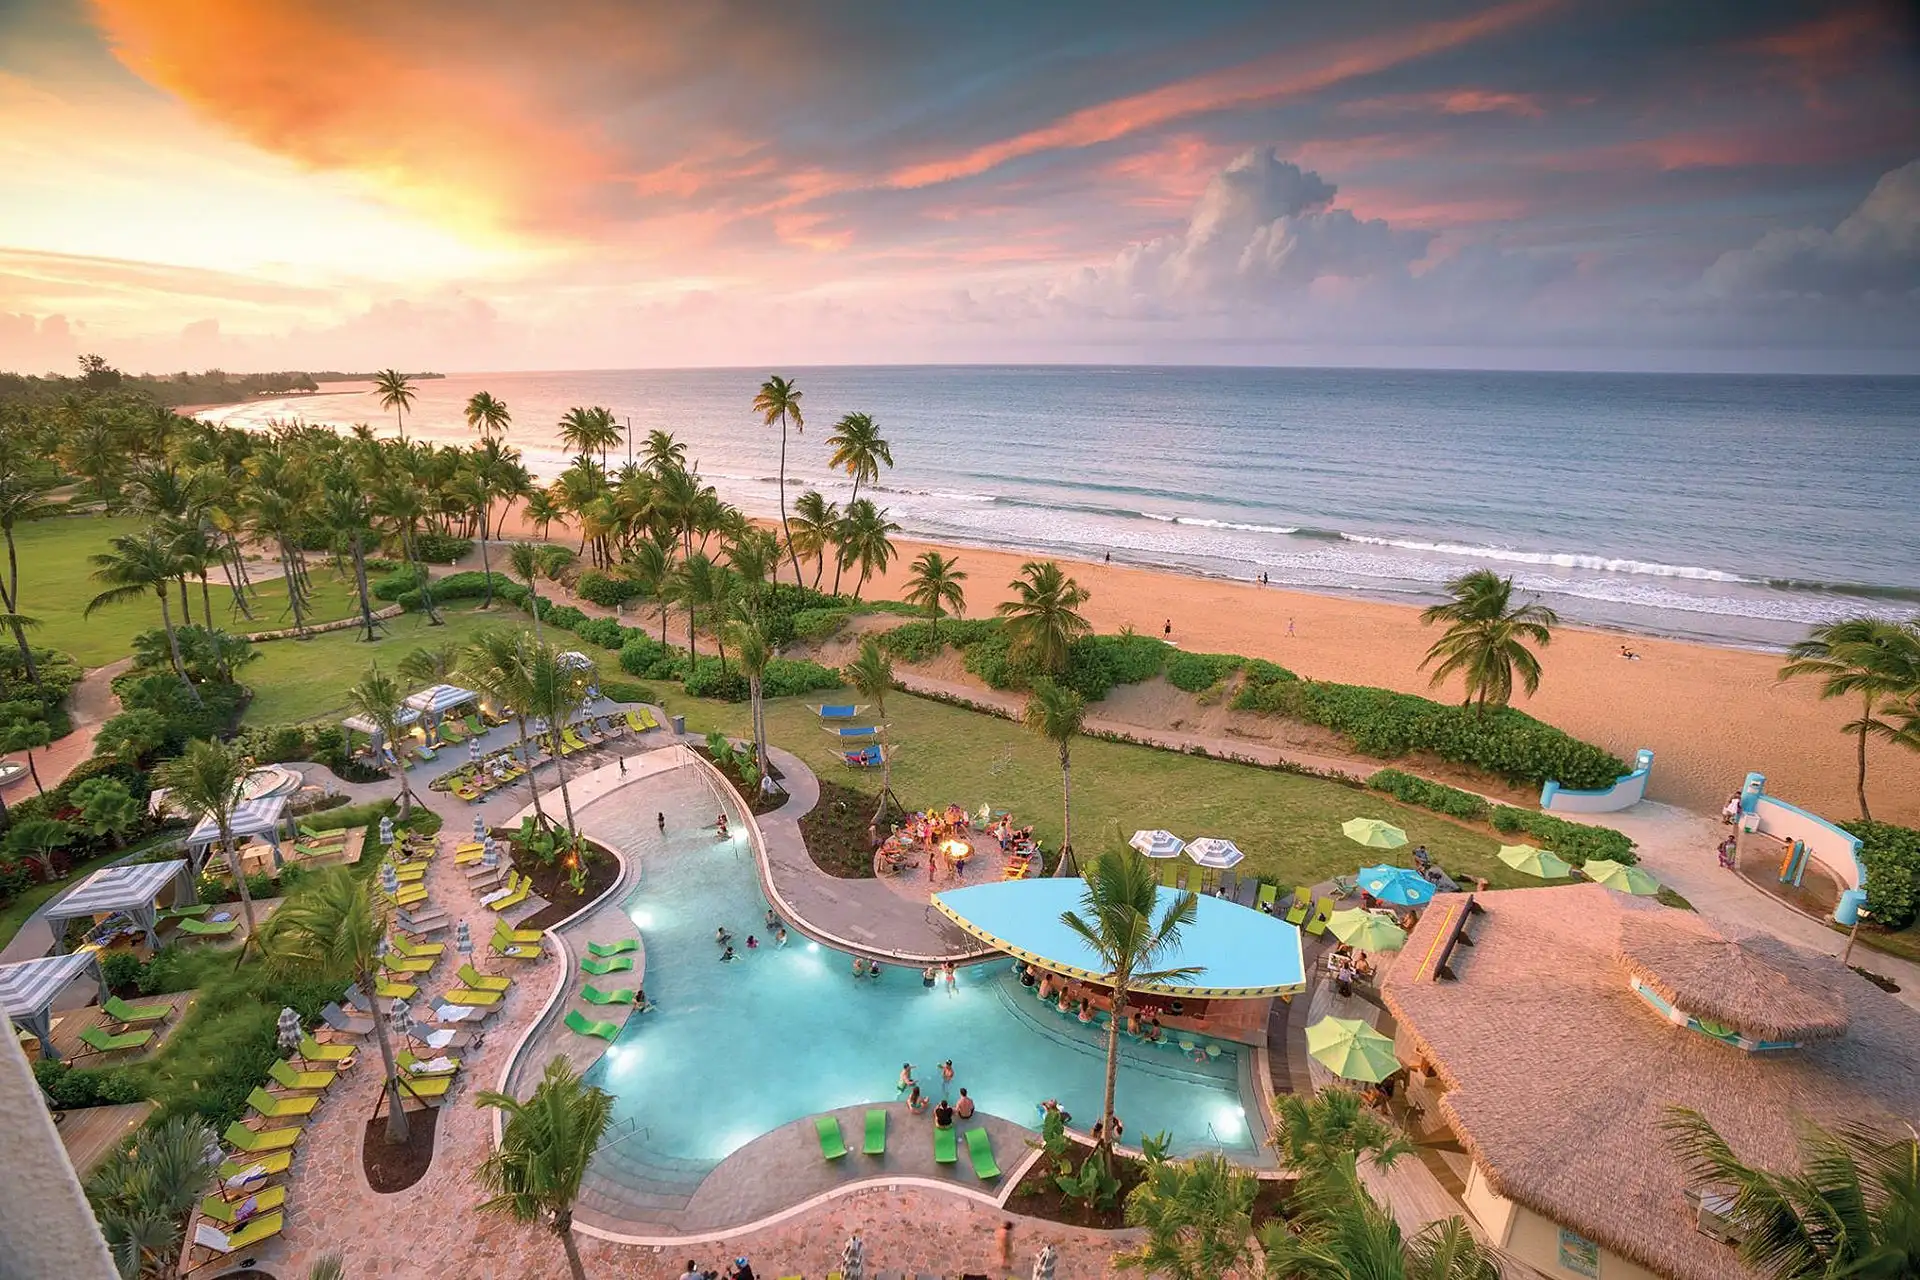 Wyndham Grand Rio Mar Puerto Rico Golf & Beach Resort; Courtesy of Wyndham Grand Rio Mar Puerto Rico Golf & Beach Resort